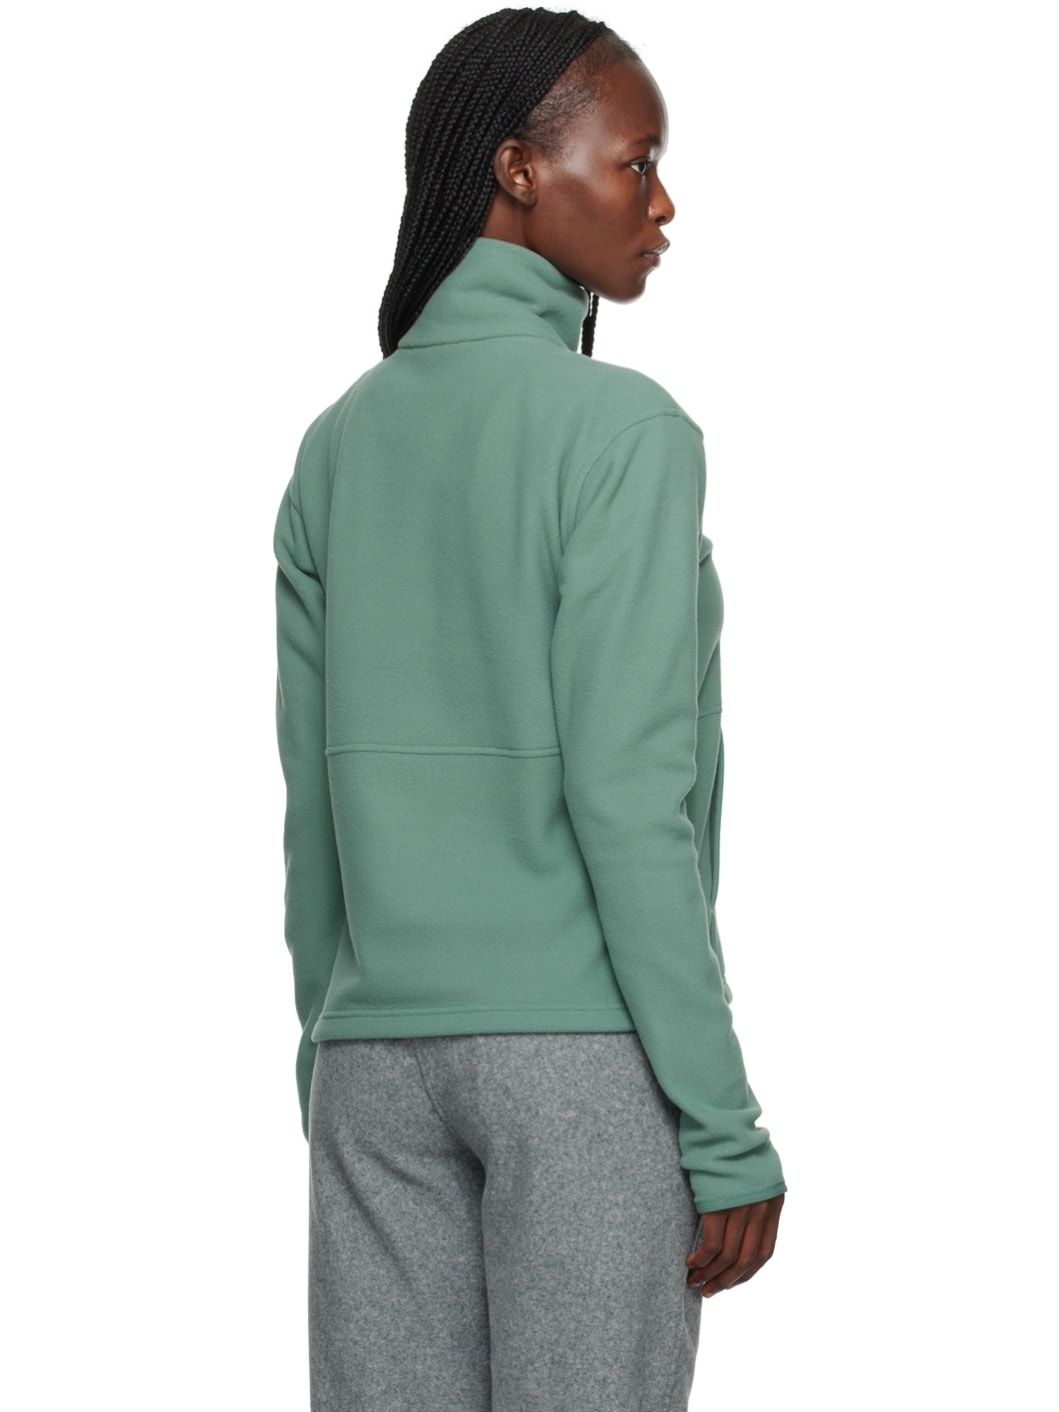 Green Alpine Polartech Sweater - 3